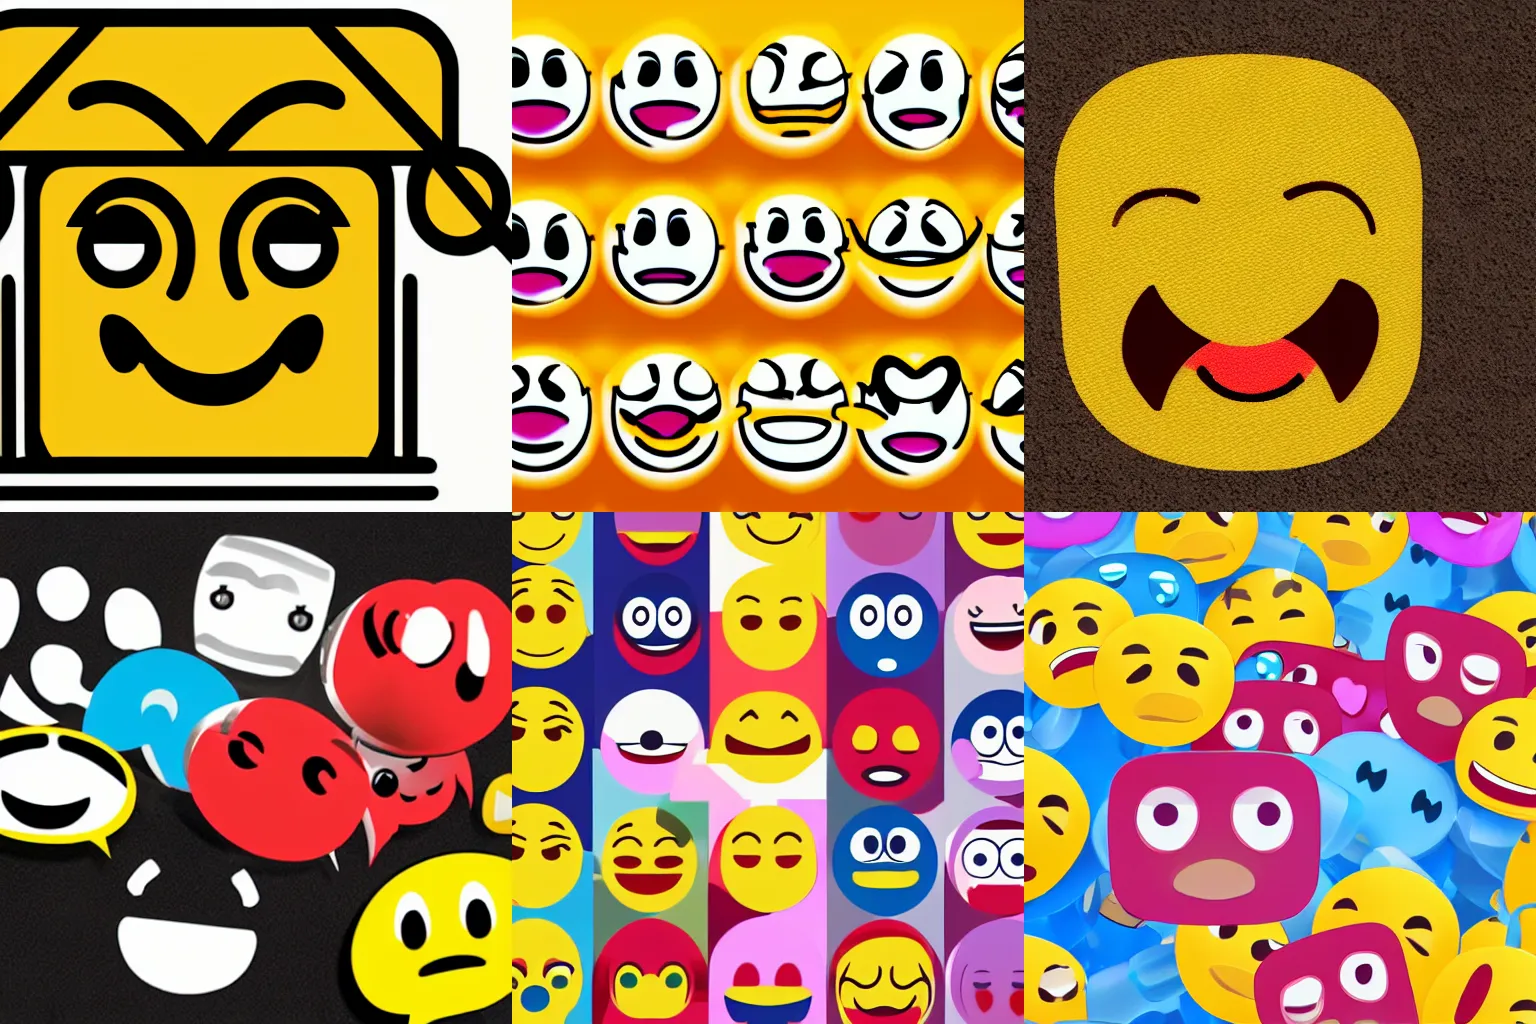 Prompt: Emoji of an excited, confused person, Samsung emoji